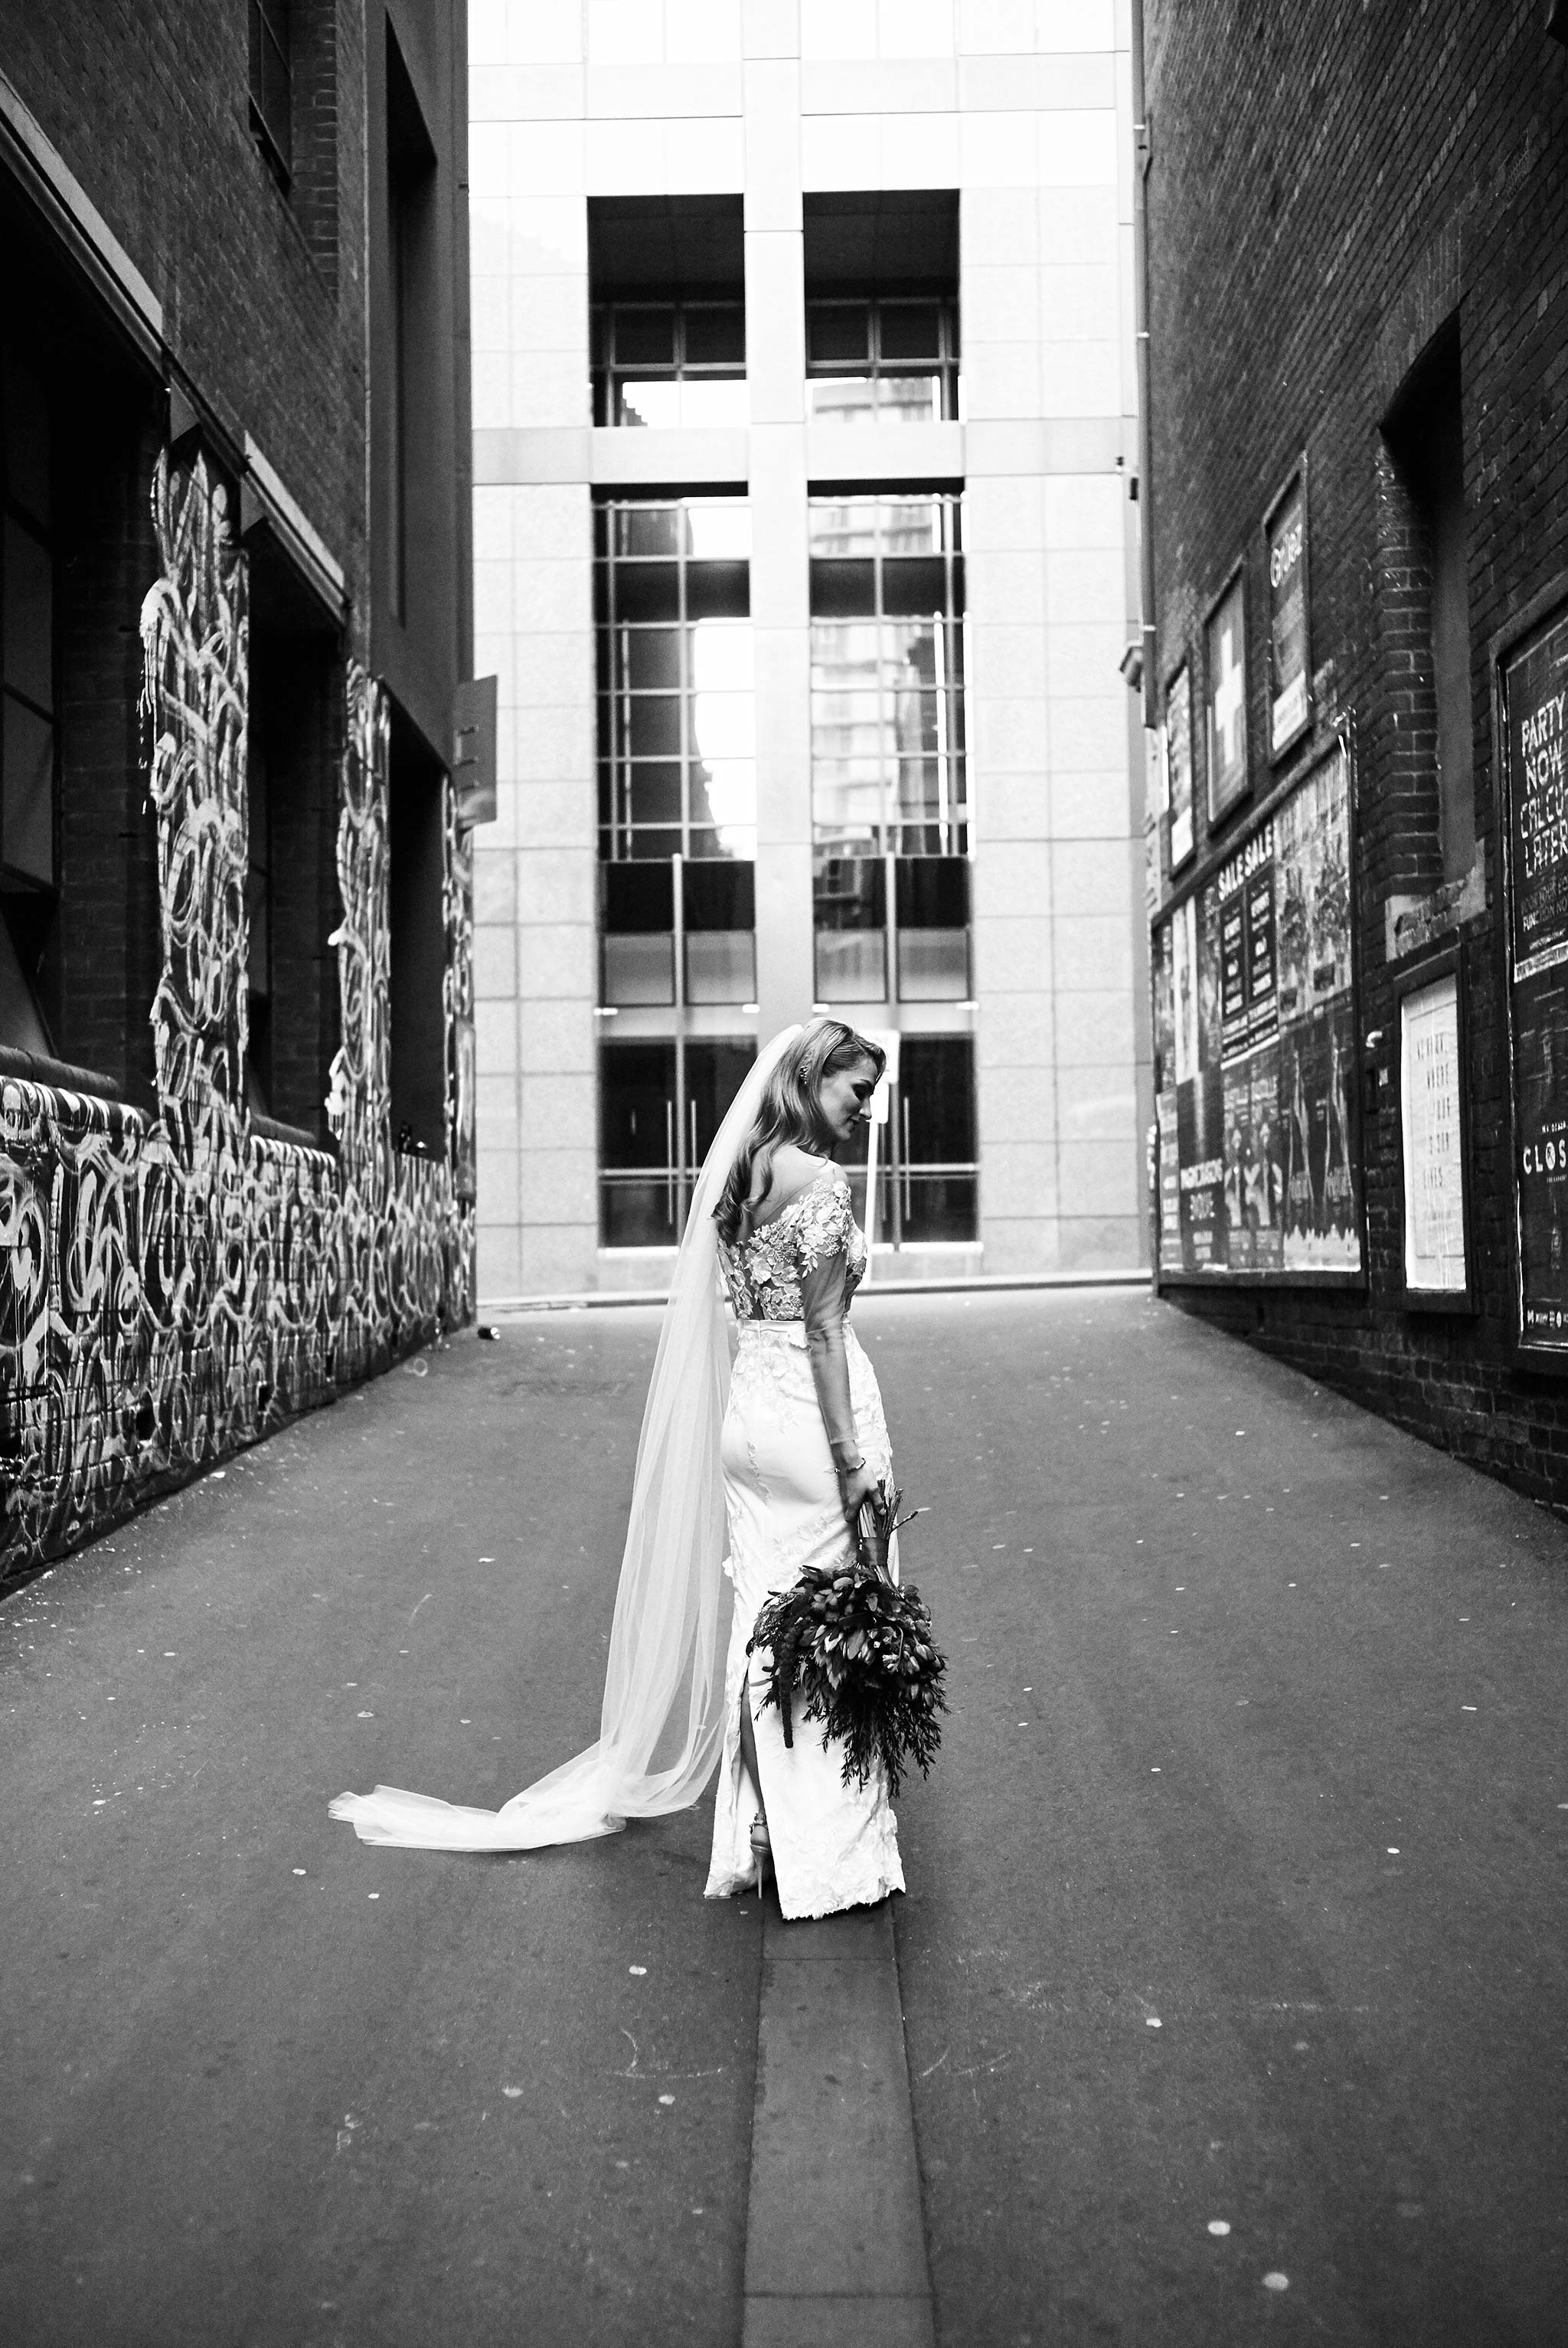 Melbourne-tour-bus-wedding-bride